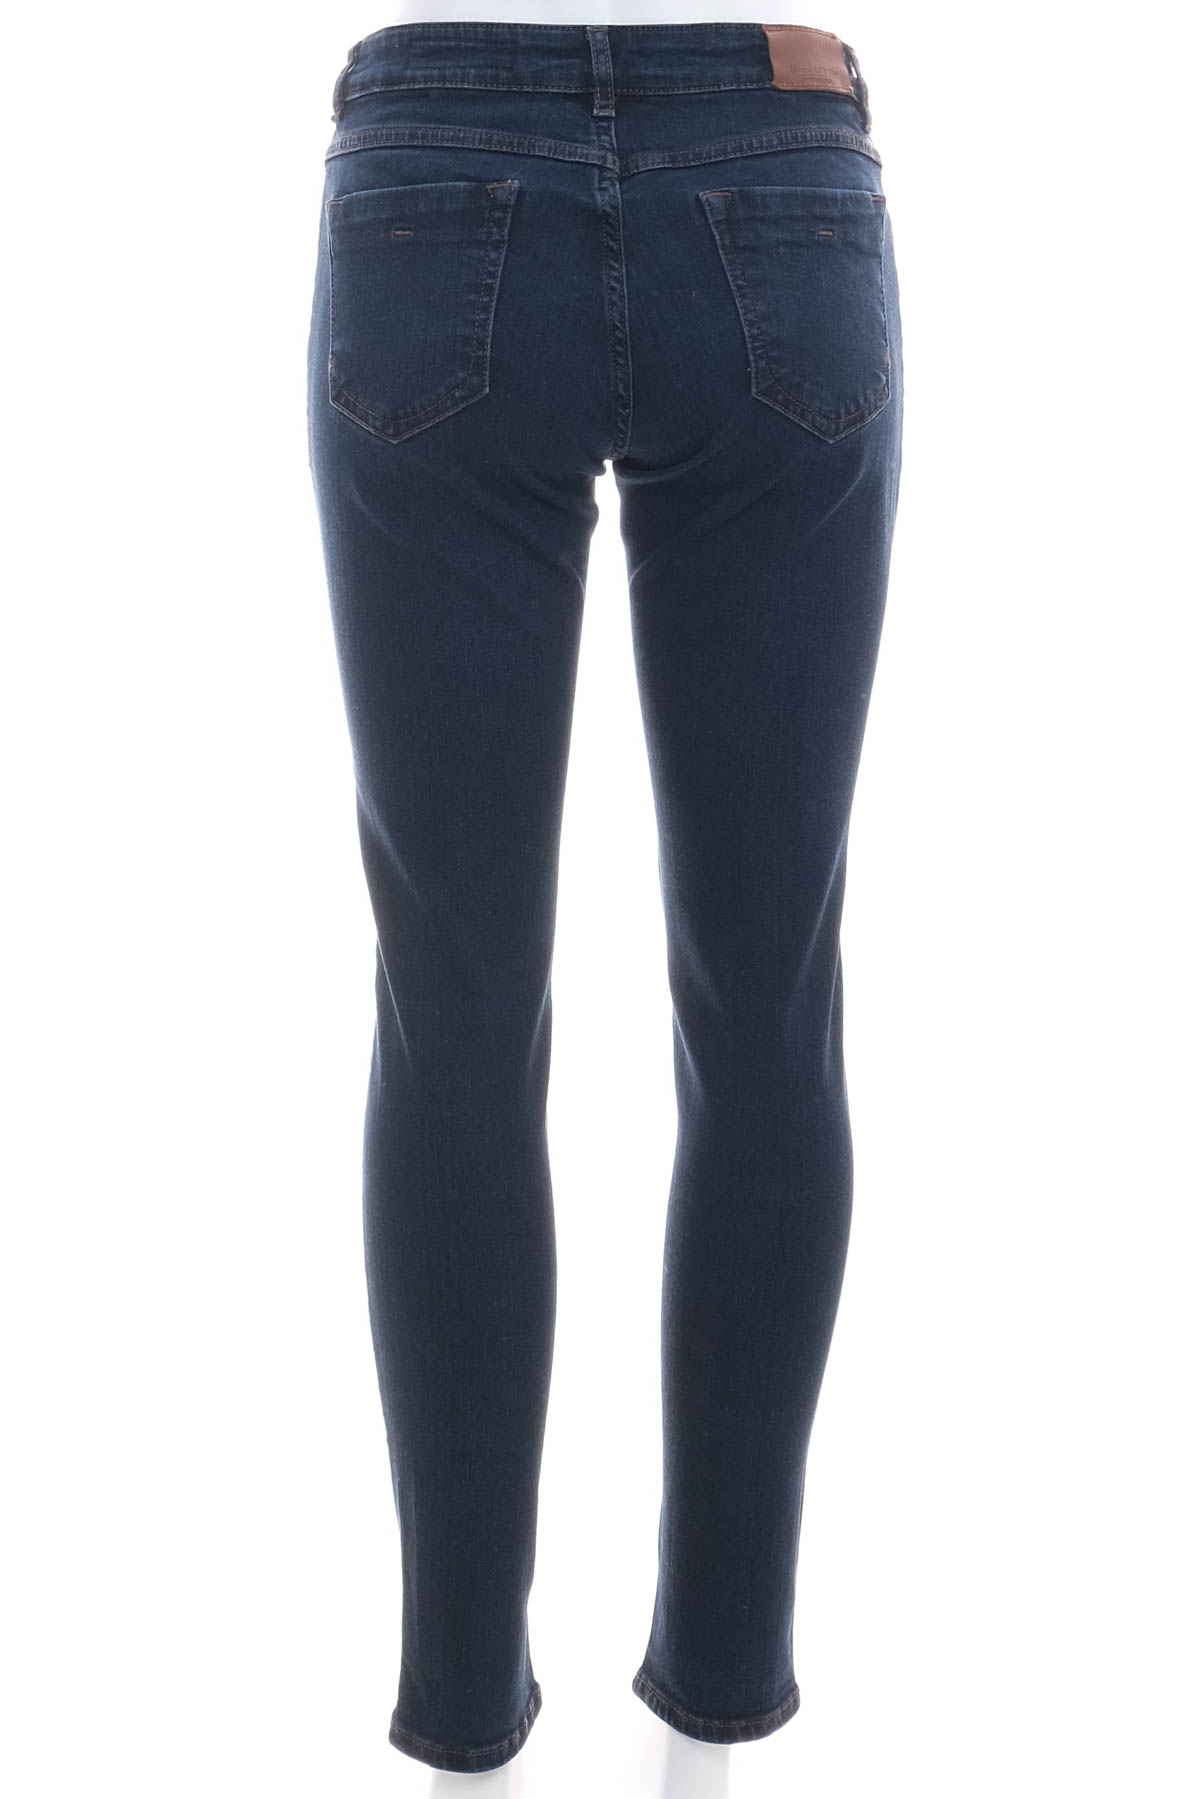 Women's jeans - Marc O' Polo - 1